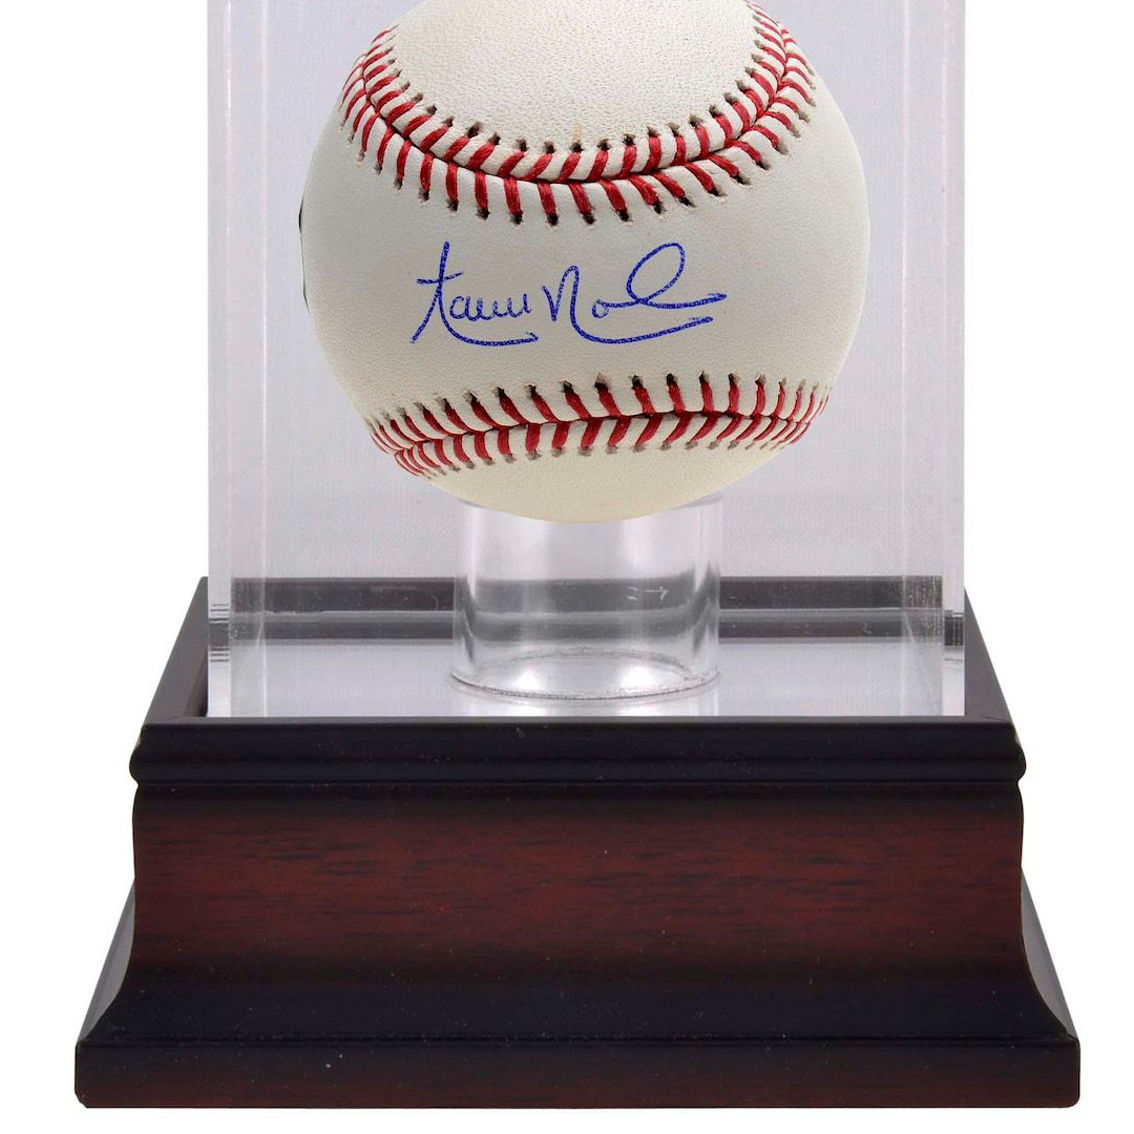 Fanatics Authentic Aaron Nola Philadelphia Phillies Autographed Baseball & Mahogany Baseball Display Case - Image 2 of 2